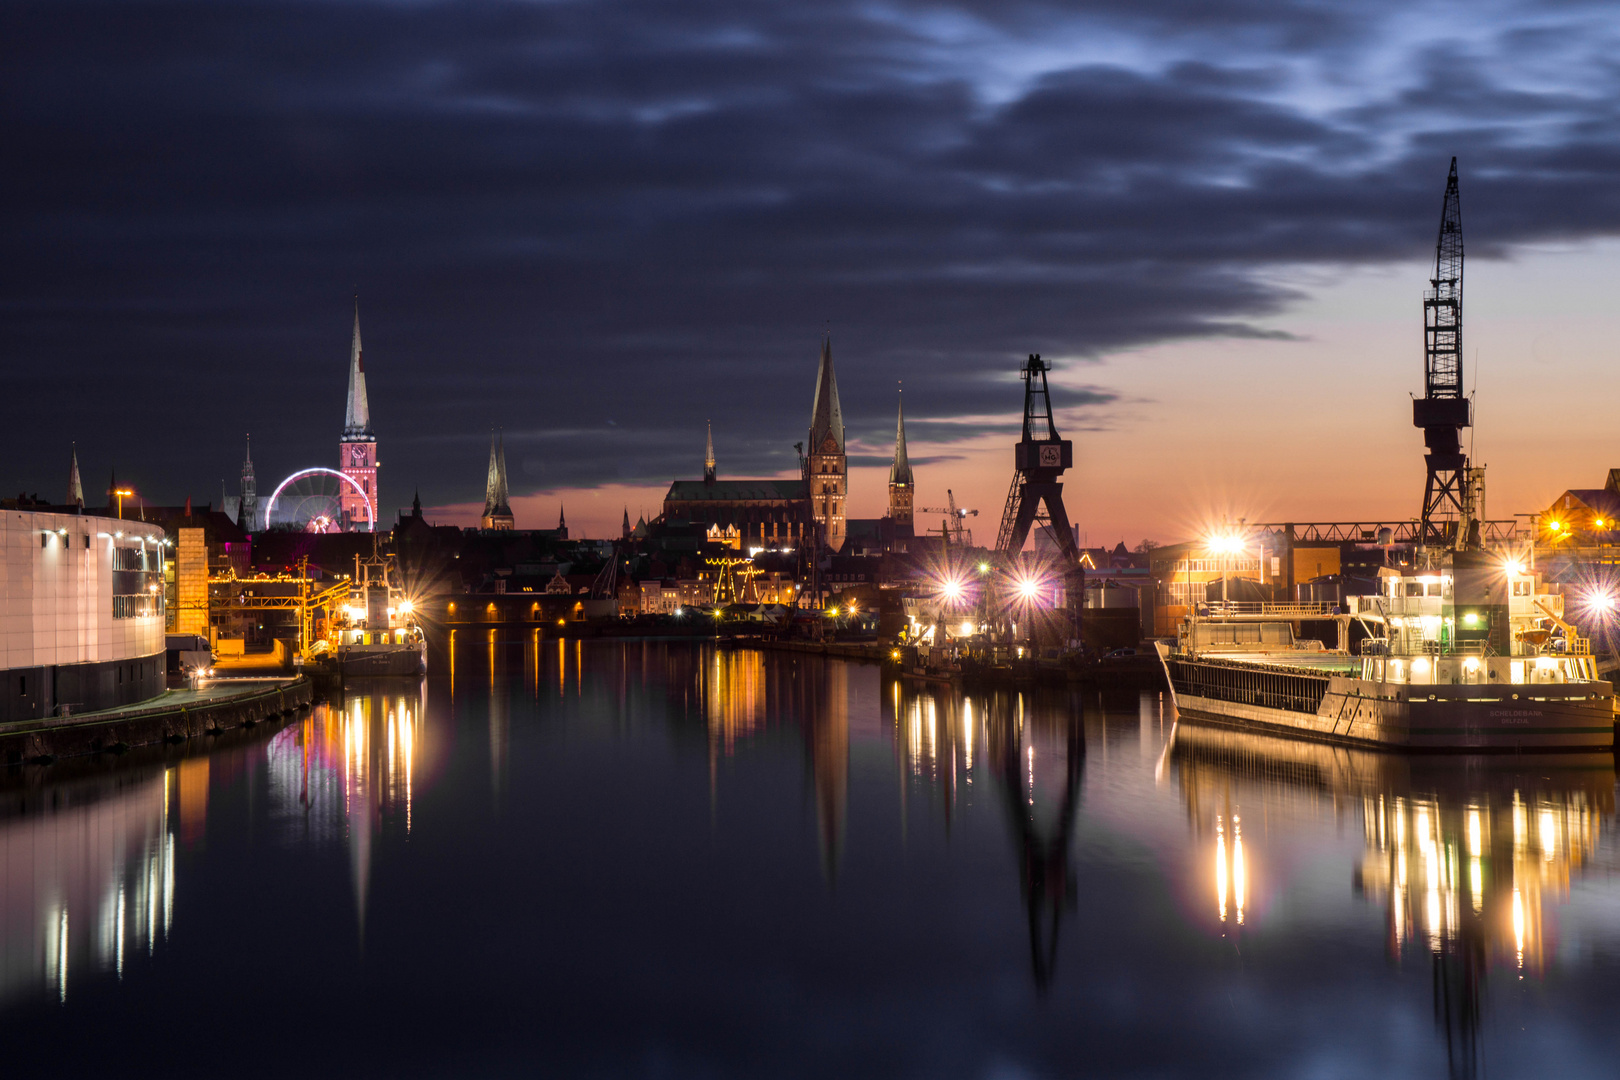 Skyline Lübeck